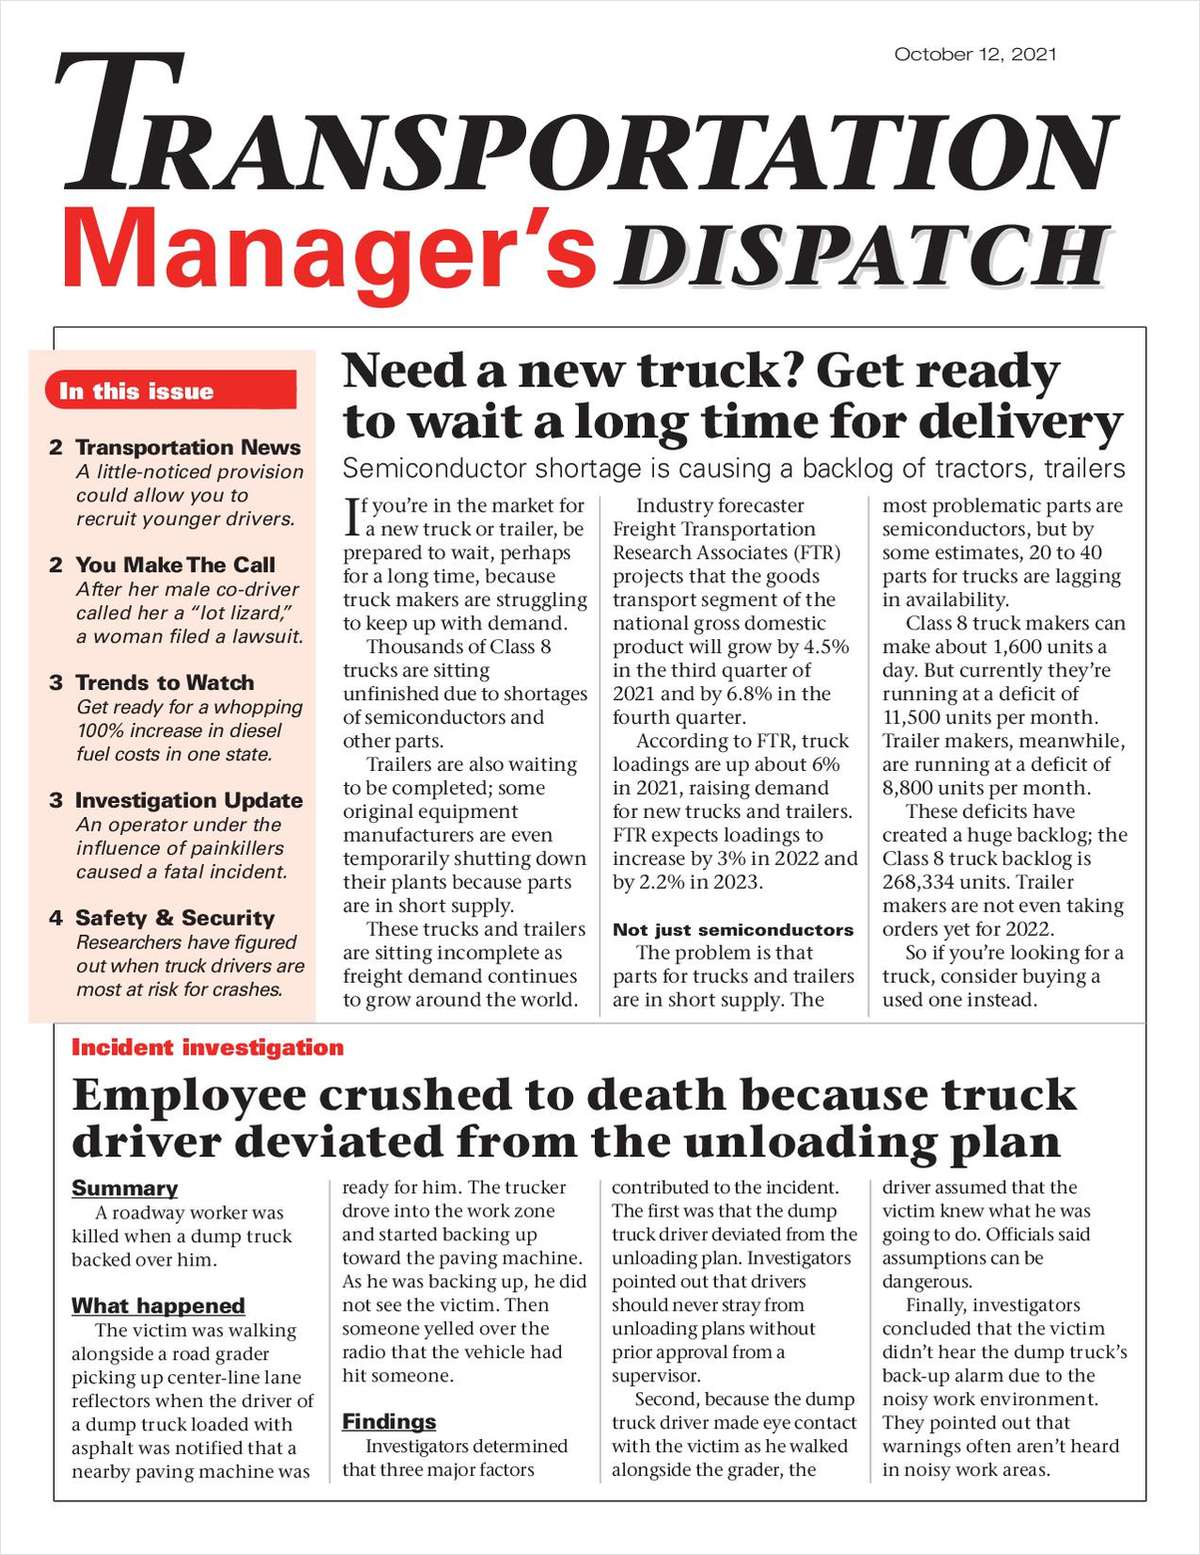 Transportation Manager's Dispatch Newsletter: October 12 Issue